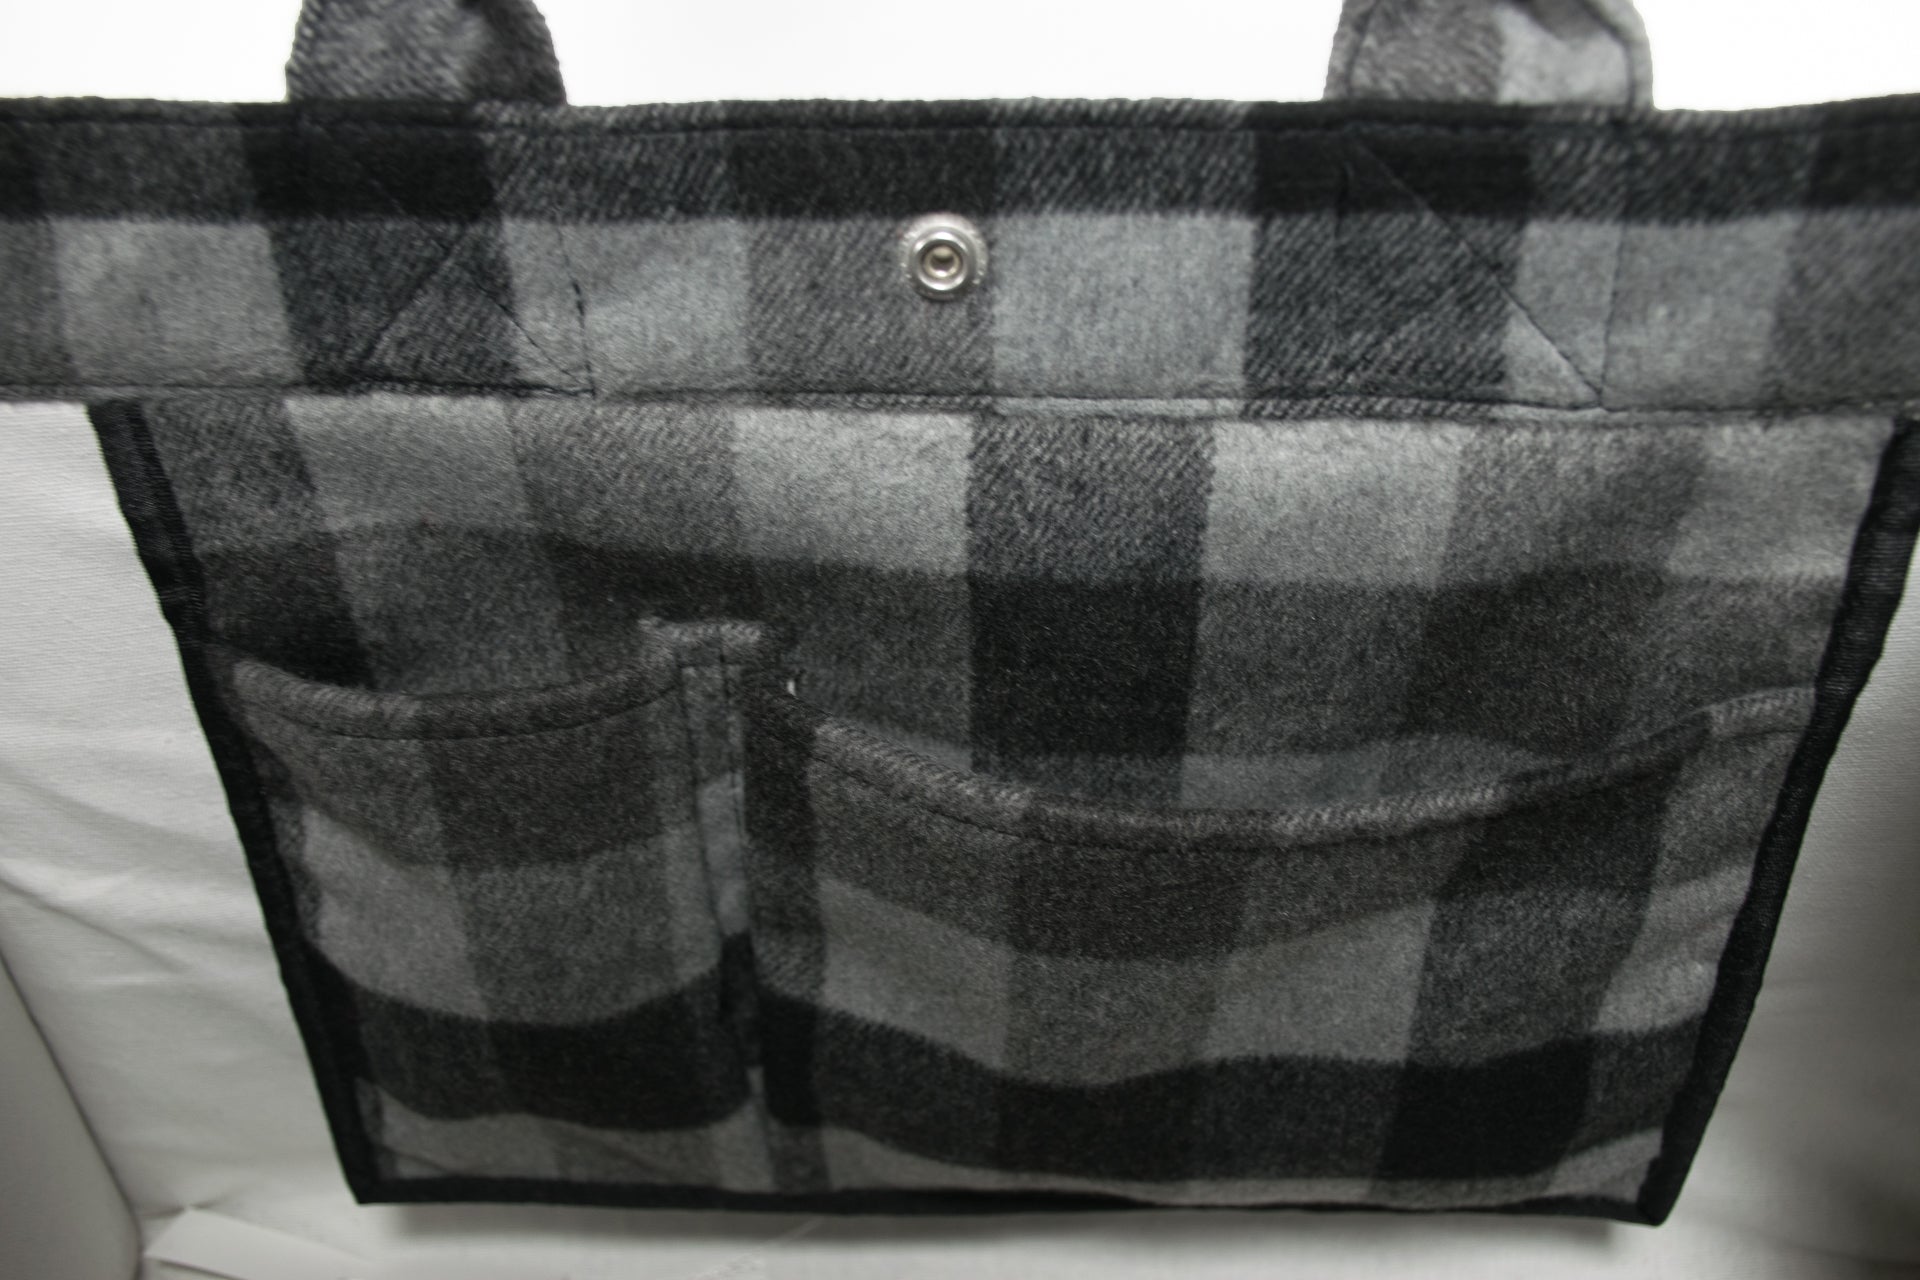 grey checkered bag